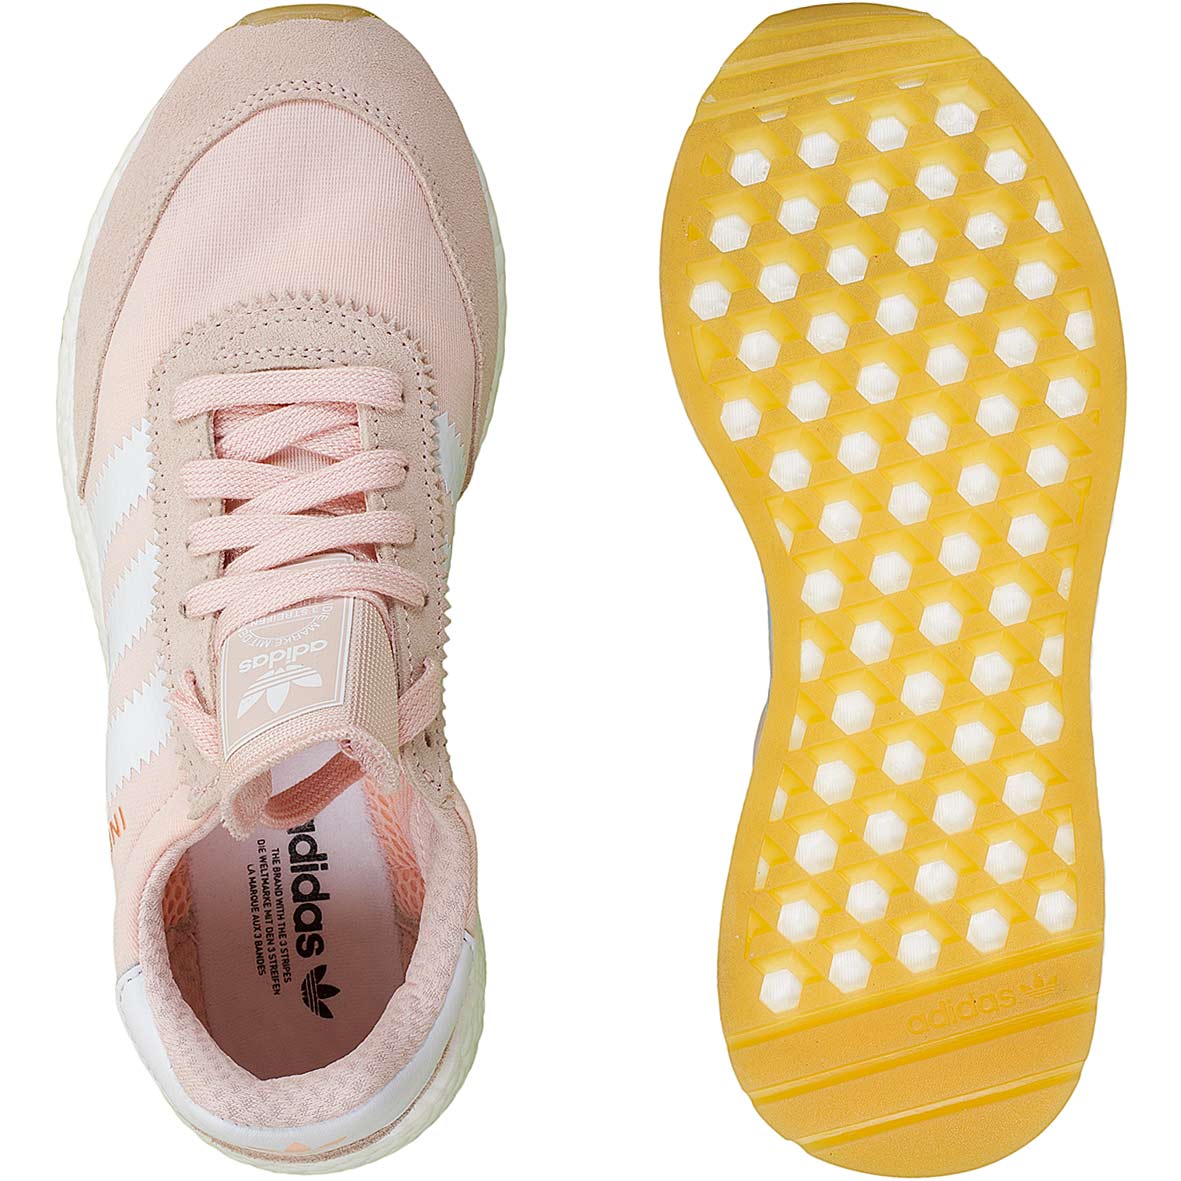 ☆ Adidas Originals Damen Sneaker Iniki Runner pink/weiß - hier bestellen!